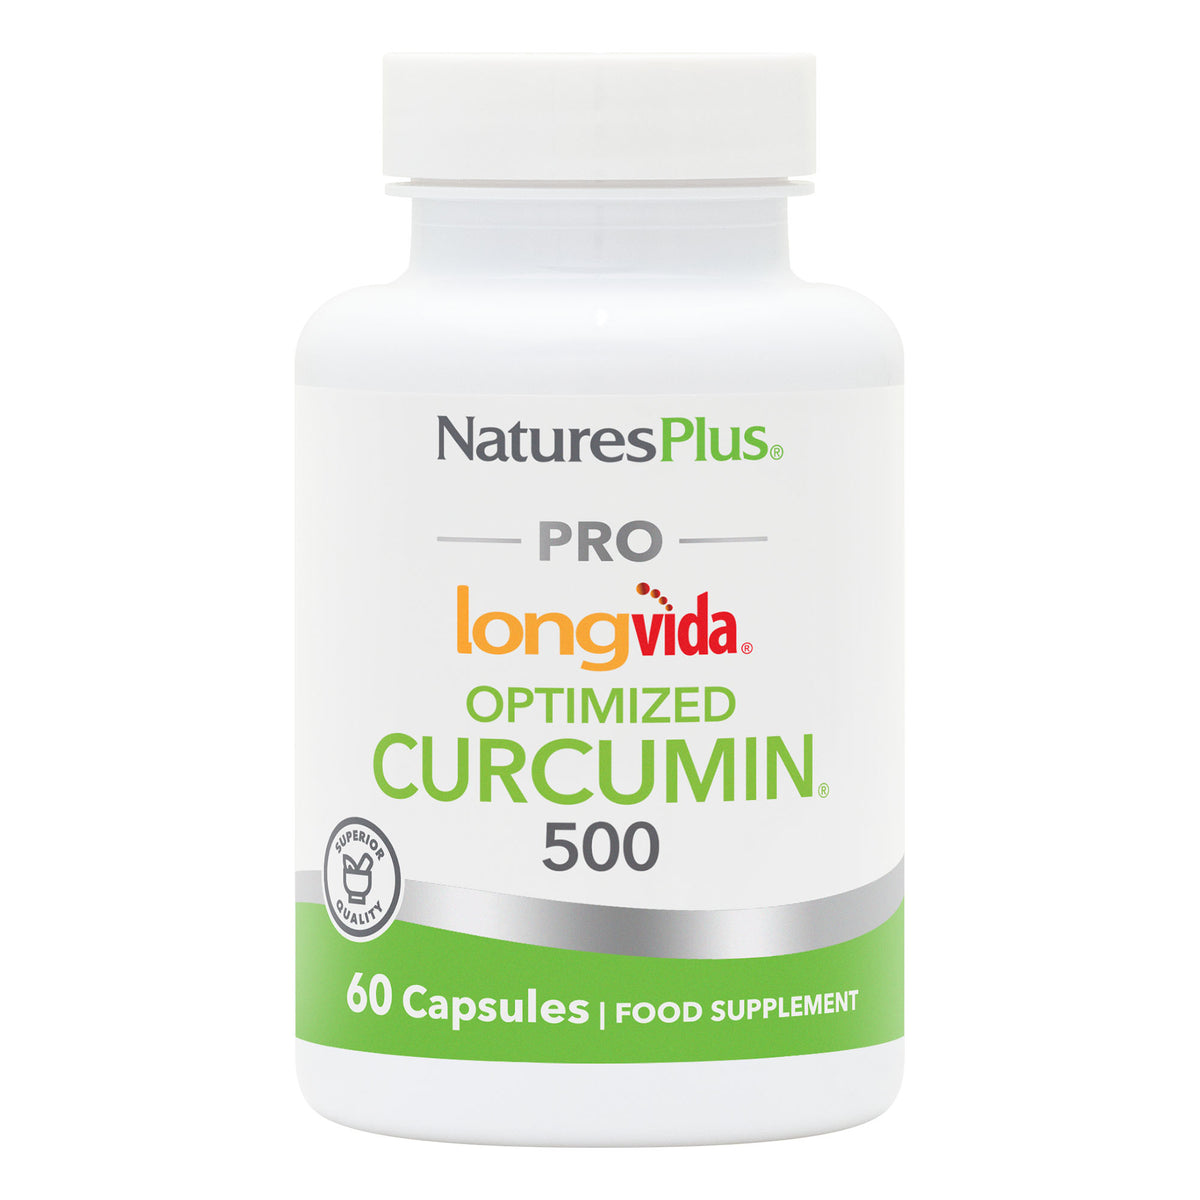 product image of NaturesPlus PRO Curcumin Longvida® 500 MG containing NaturesPlus PRO Curcumin Longvida® 500 MG